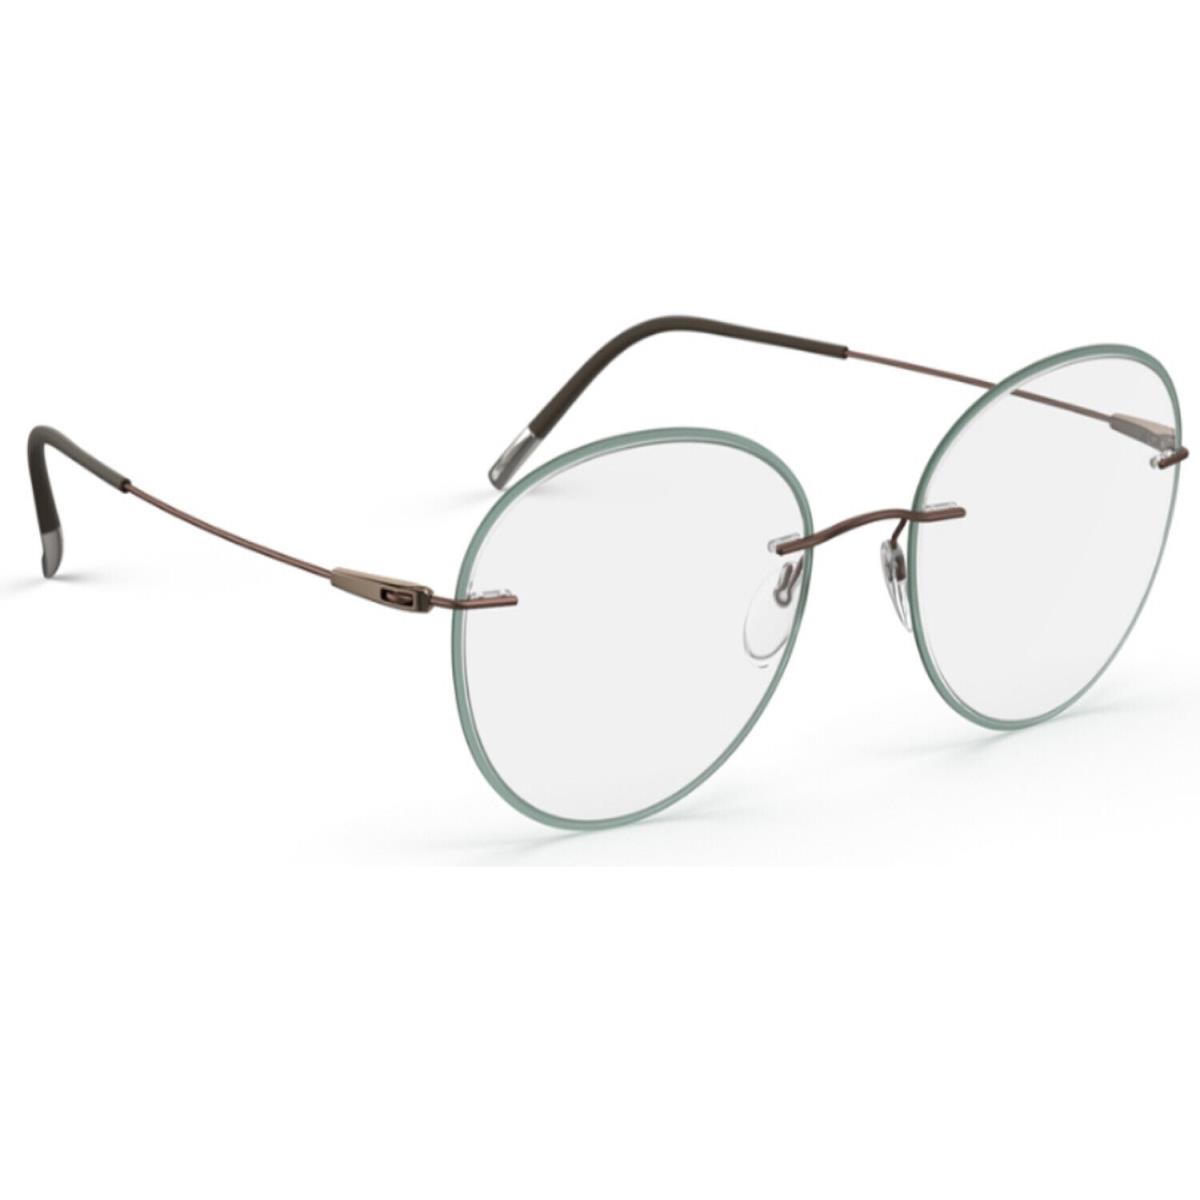 Silhouette Eyeglasses Dynamics Colorwave 51/21/150 Brown Green 5500/GY-6140